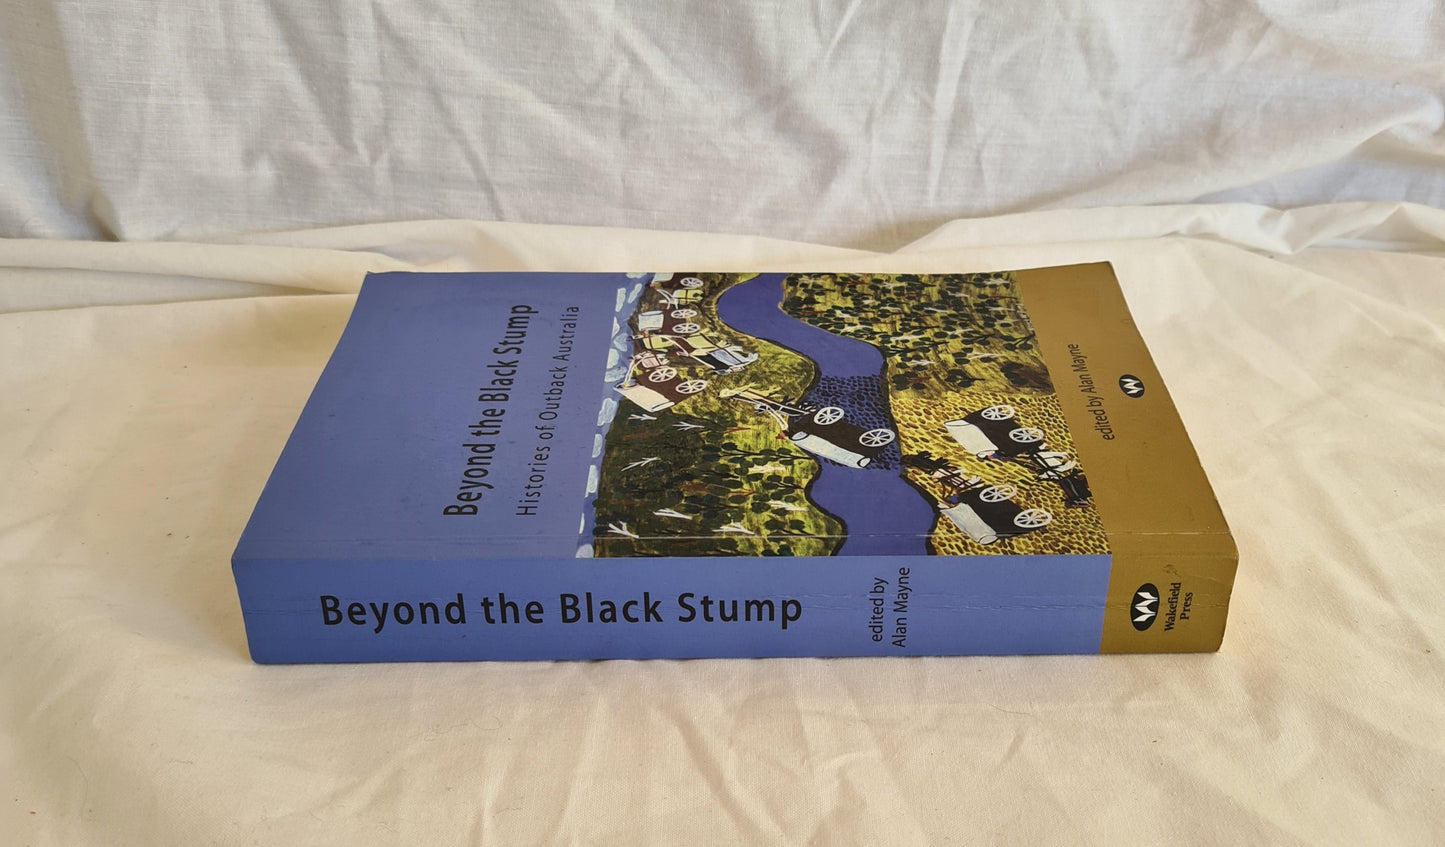 Beyond the Black Stump by Alan Mayne